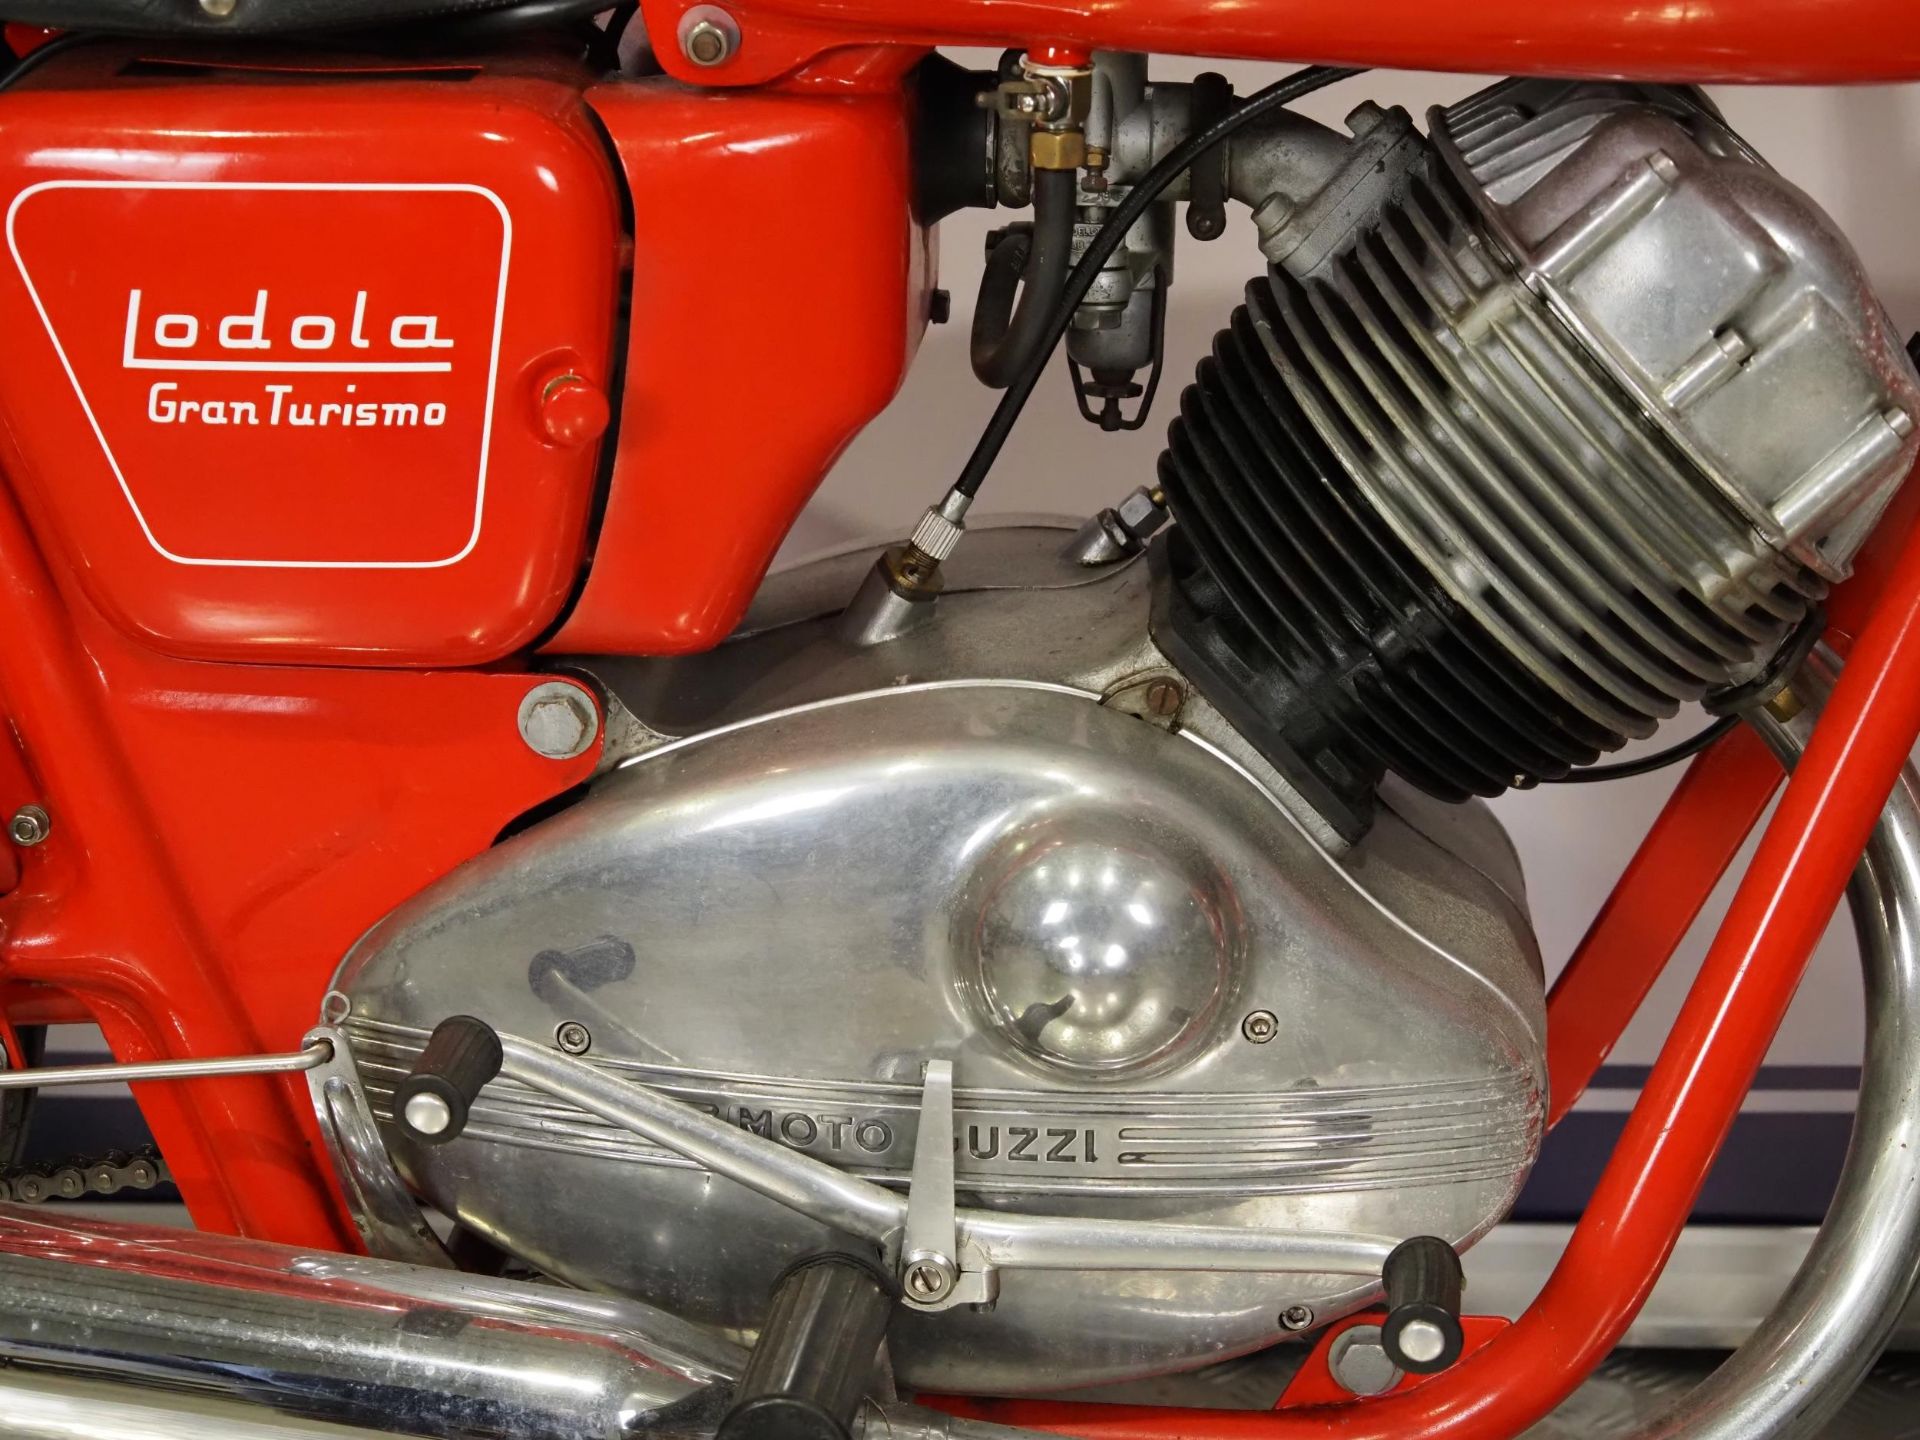 Moto Guzzi Lodola Gran Turismo motorcycle. 1961. 235cc Engine No. RDP36 Bike was last ridden in 2020 - Image 5 of 7